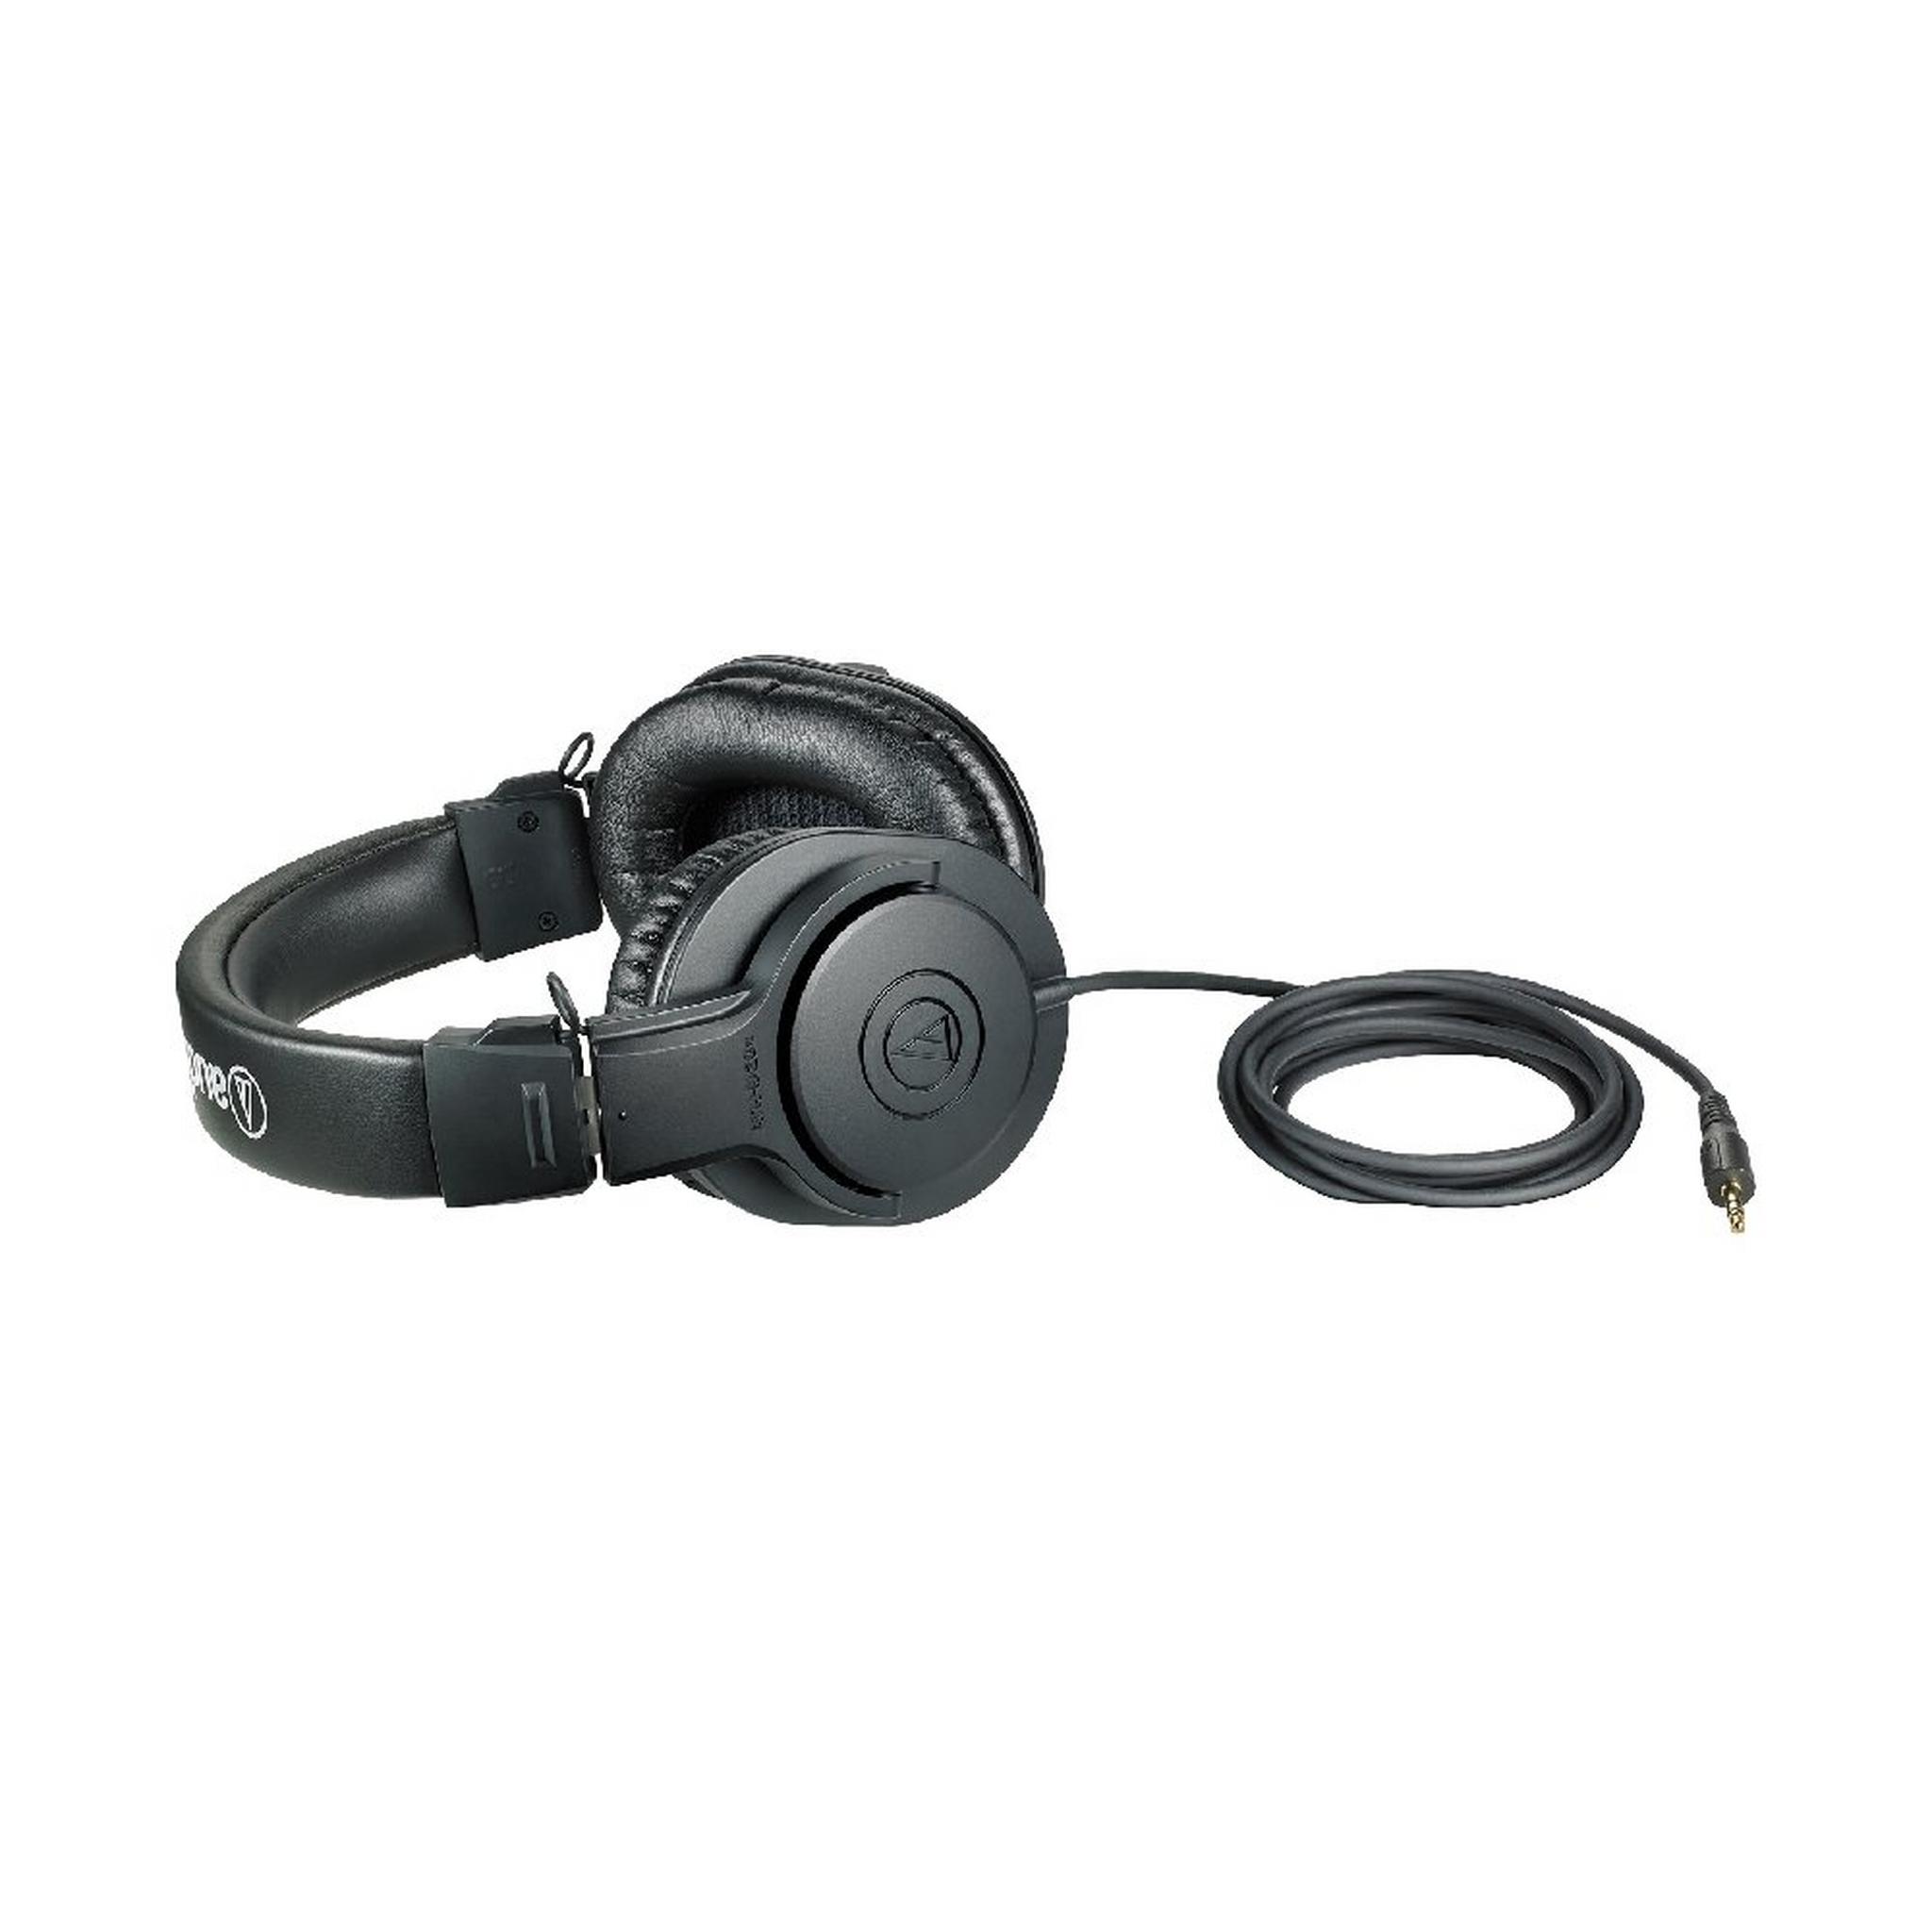 AudioTechnica Professional Studio Monitor Wired Headphones, ATH-M20x - Black